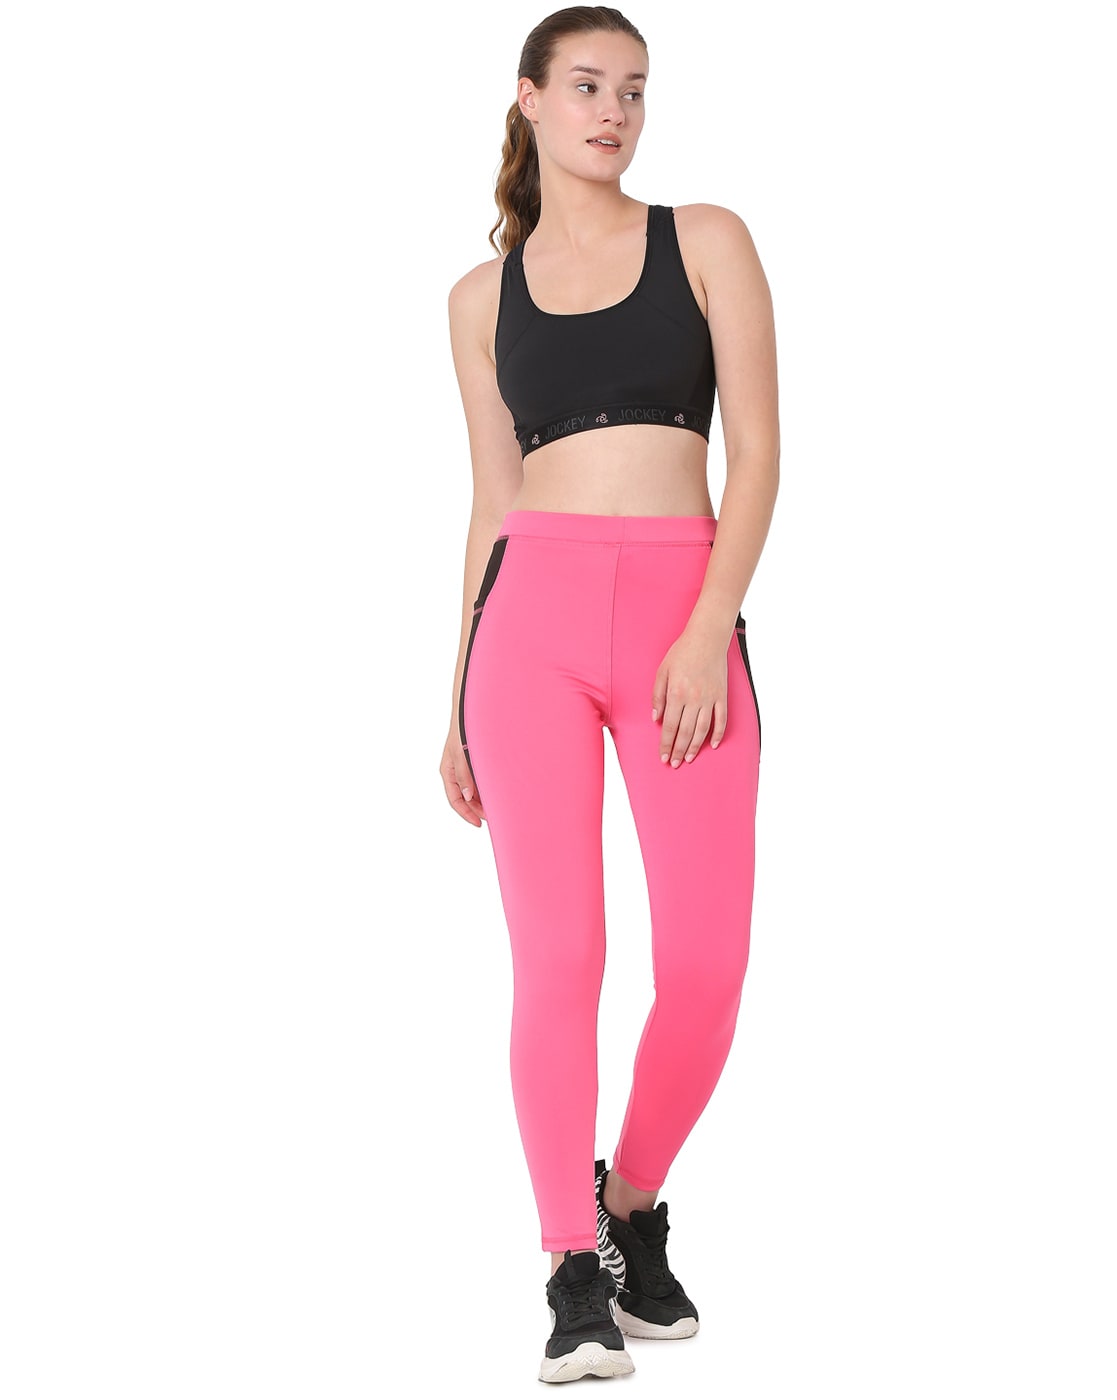 Tiktok Leggings for Women (Pink), Butt Lifting High Waist Yoga Pants, Tummy  Control Scrunch Workout Running Booty Tights, XL Size - Walmart.com